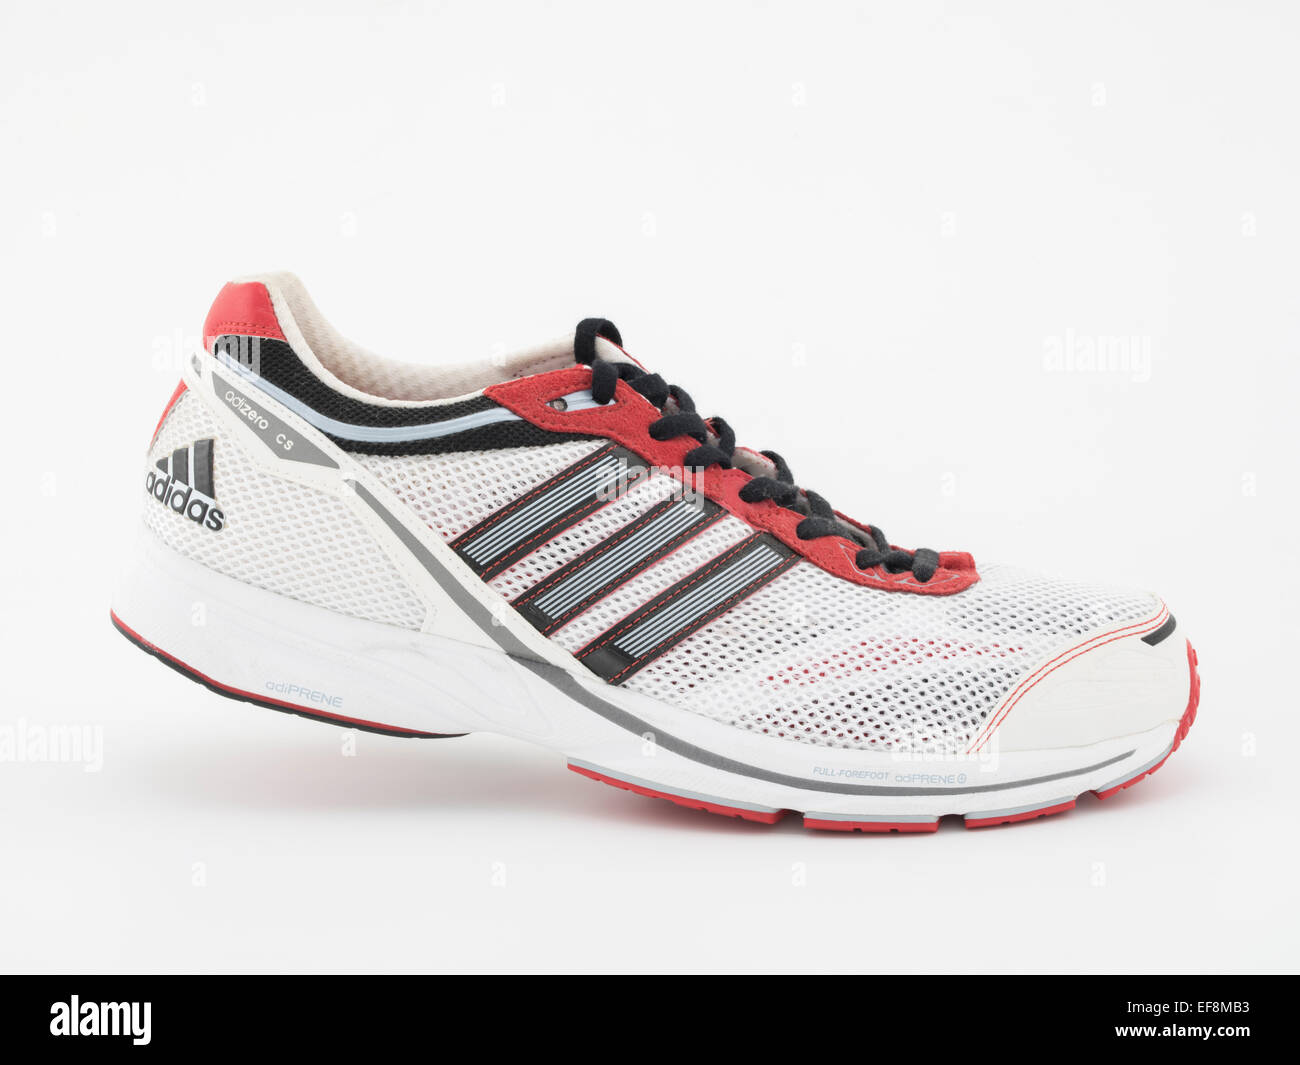 Adidas AdiZero CS a lightweight running shoe designed for racing, 10K, marathon runs. Stock Photo